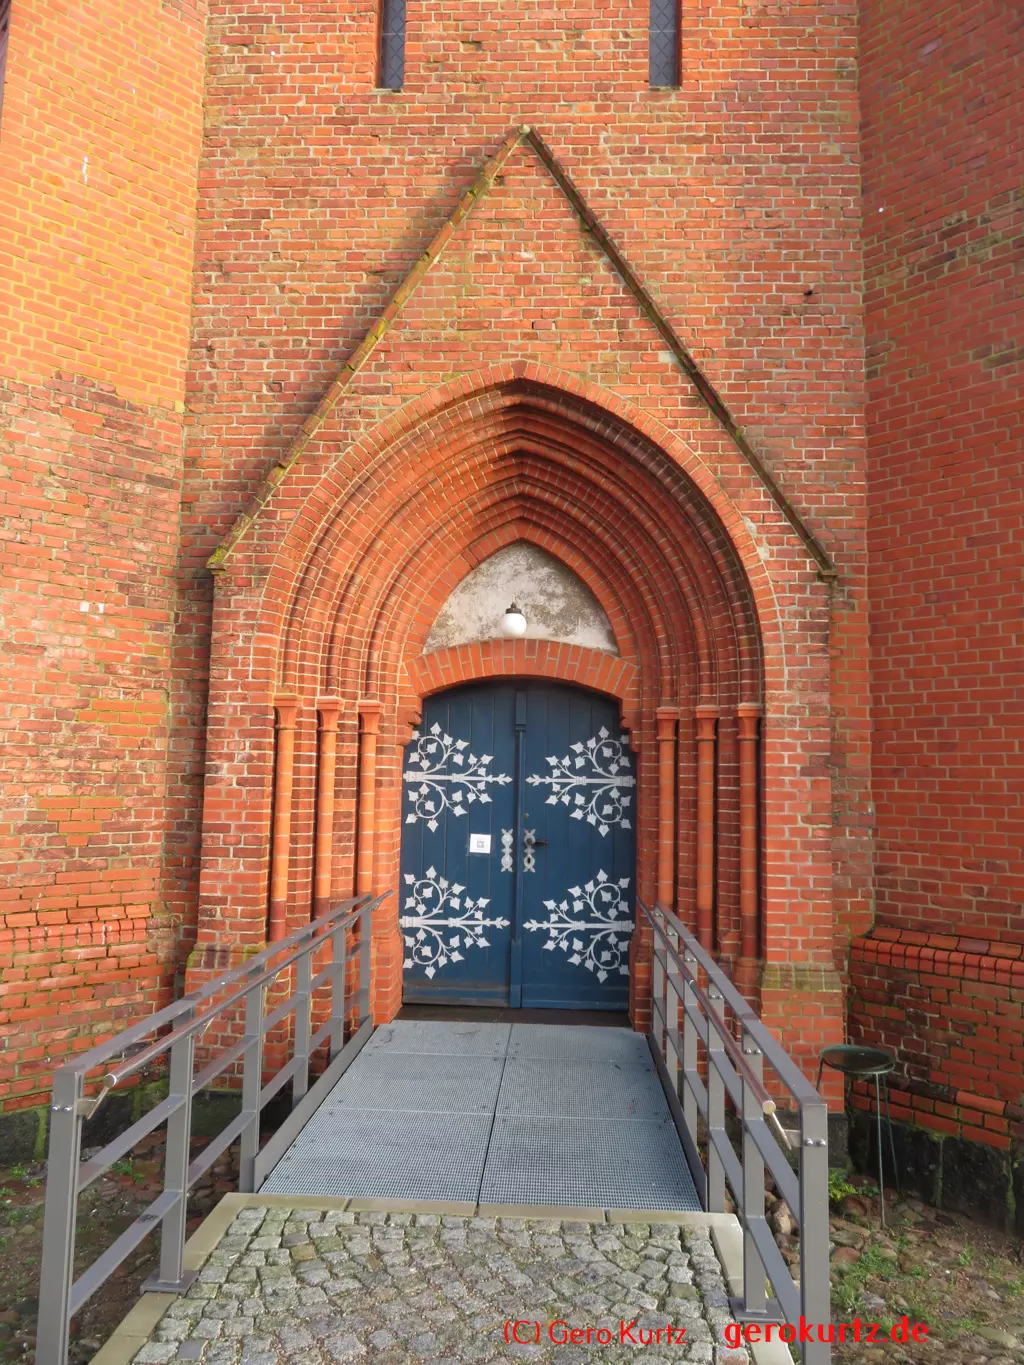 Reisebericht Ostseebad Wustrow - Kirche Eingang zum Turm 